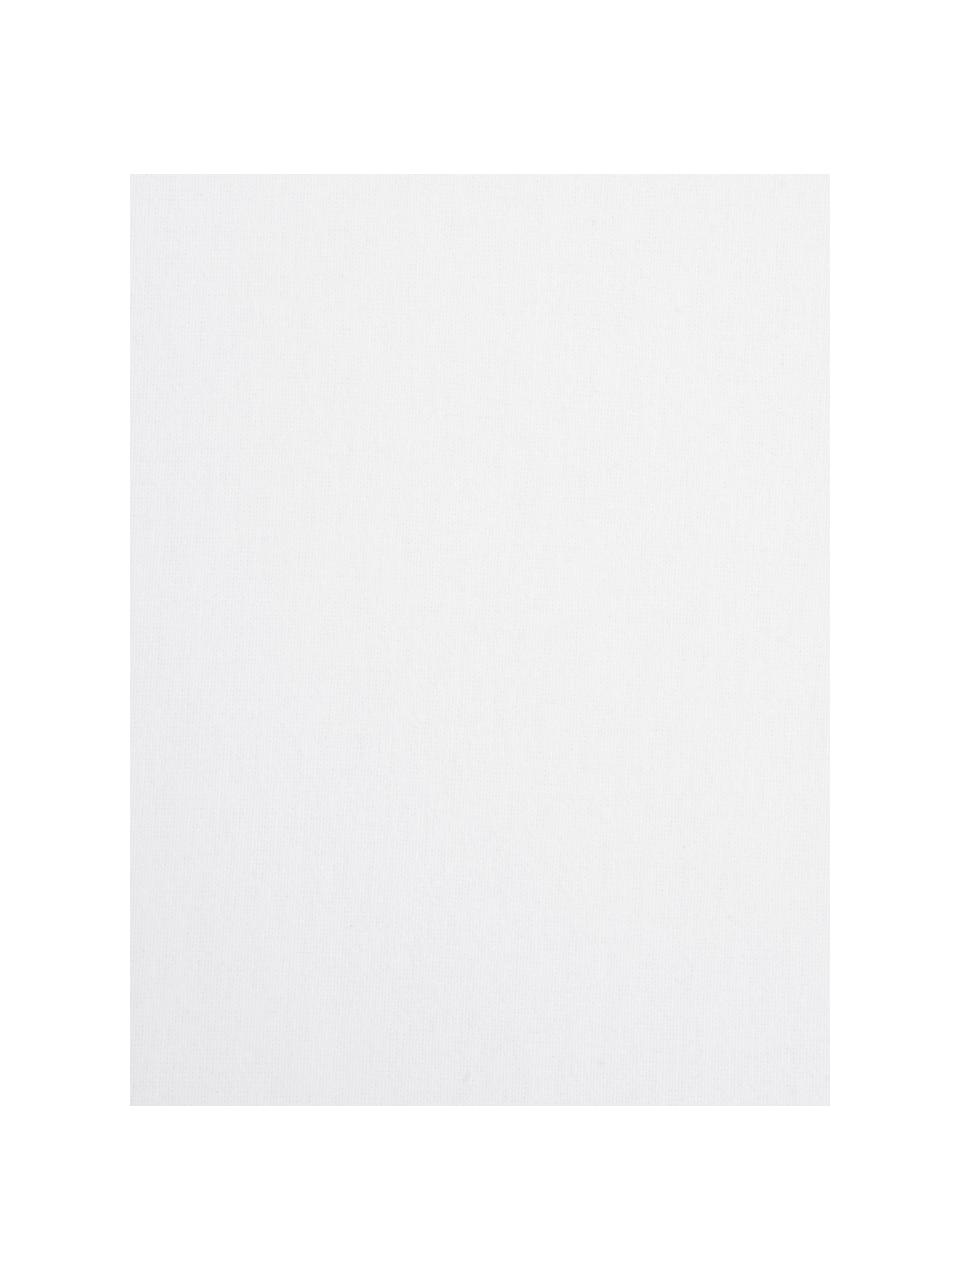 Flanellen hoeslaken Biba in wit, Weeftechniek: flanel Flanel is een knuf, Wit, B 90 x L 200 cm